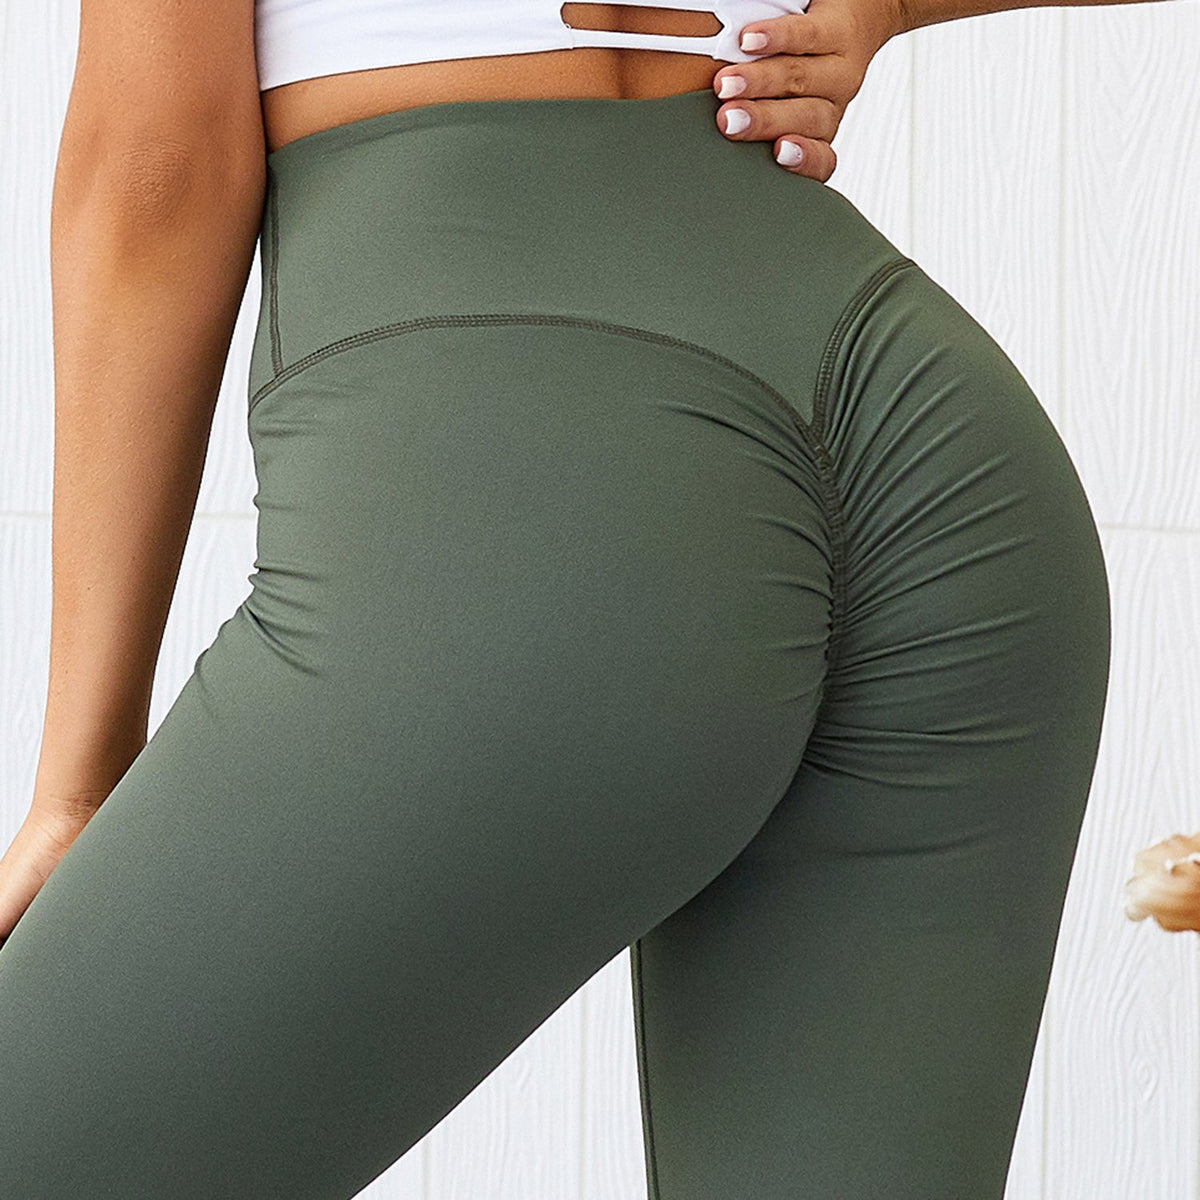 Scrunch Butt Lift peach butt Fitness Pants Yoga Pants - worthtryit.com